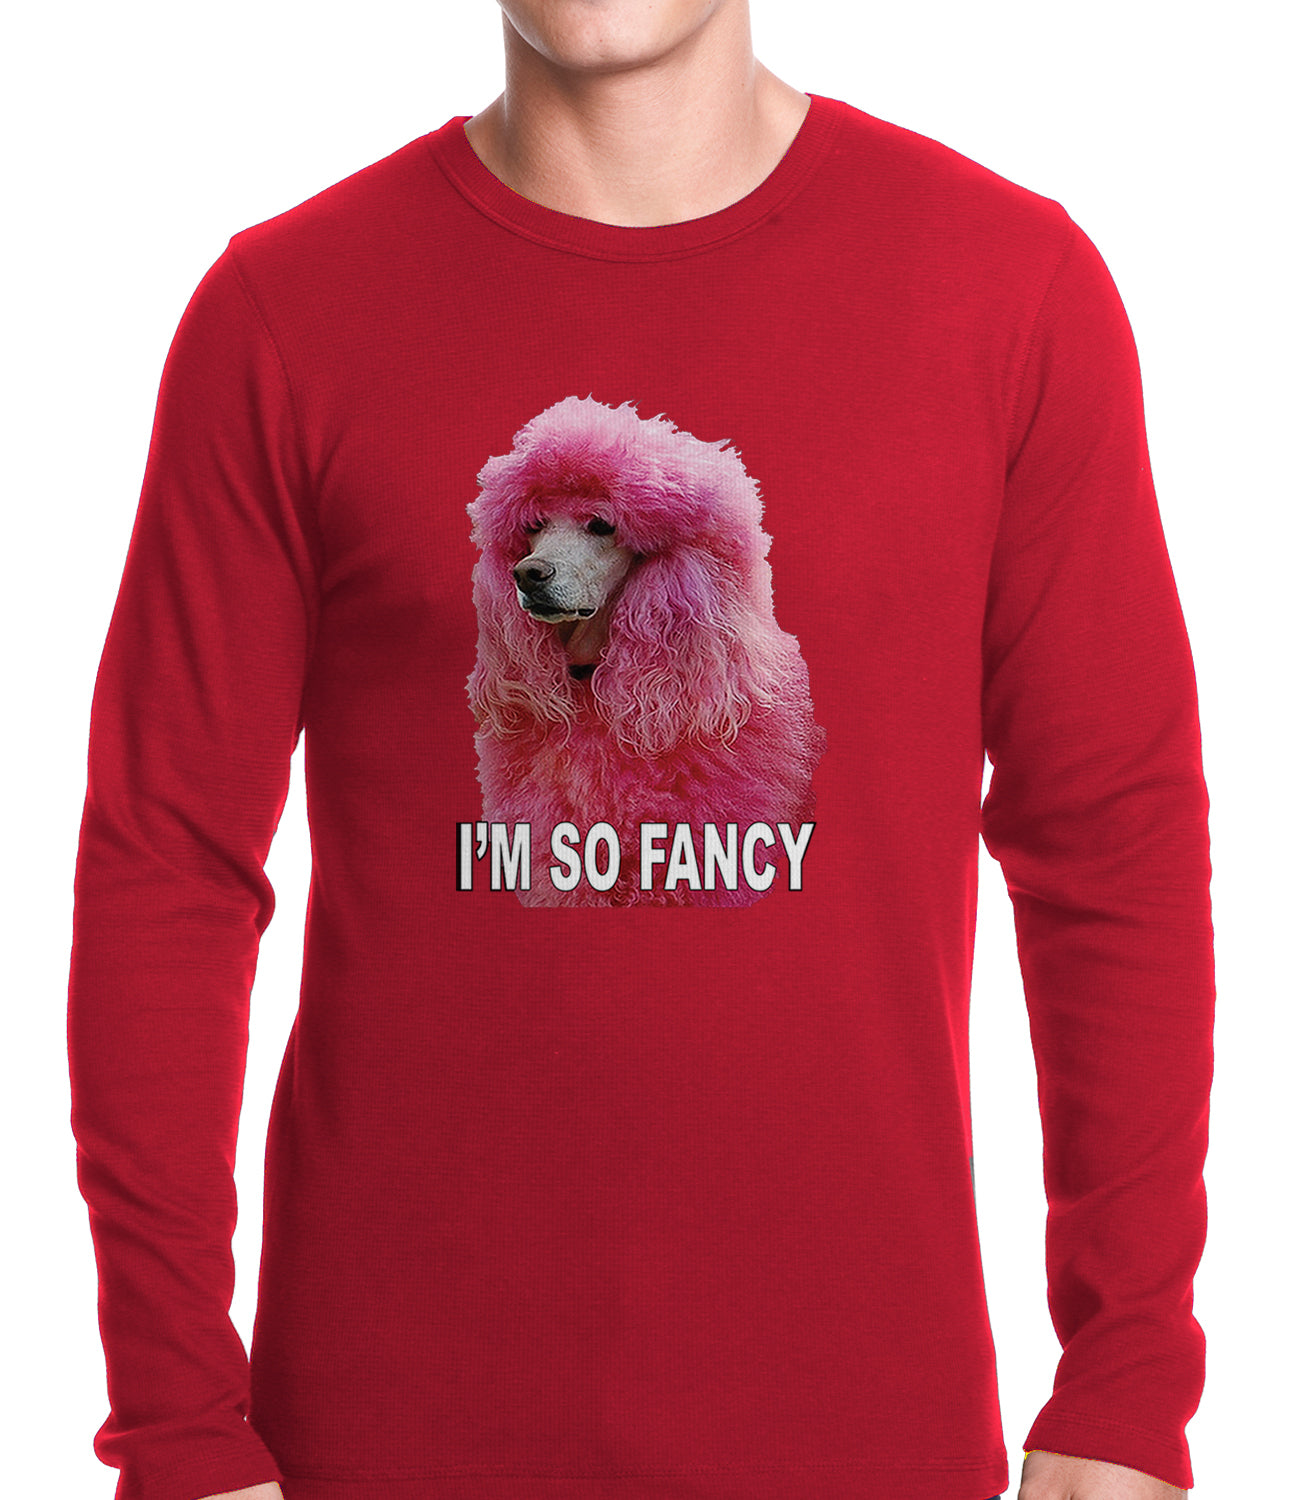 I'm So Fancy - Pink Poodle Thermal Shirt